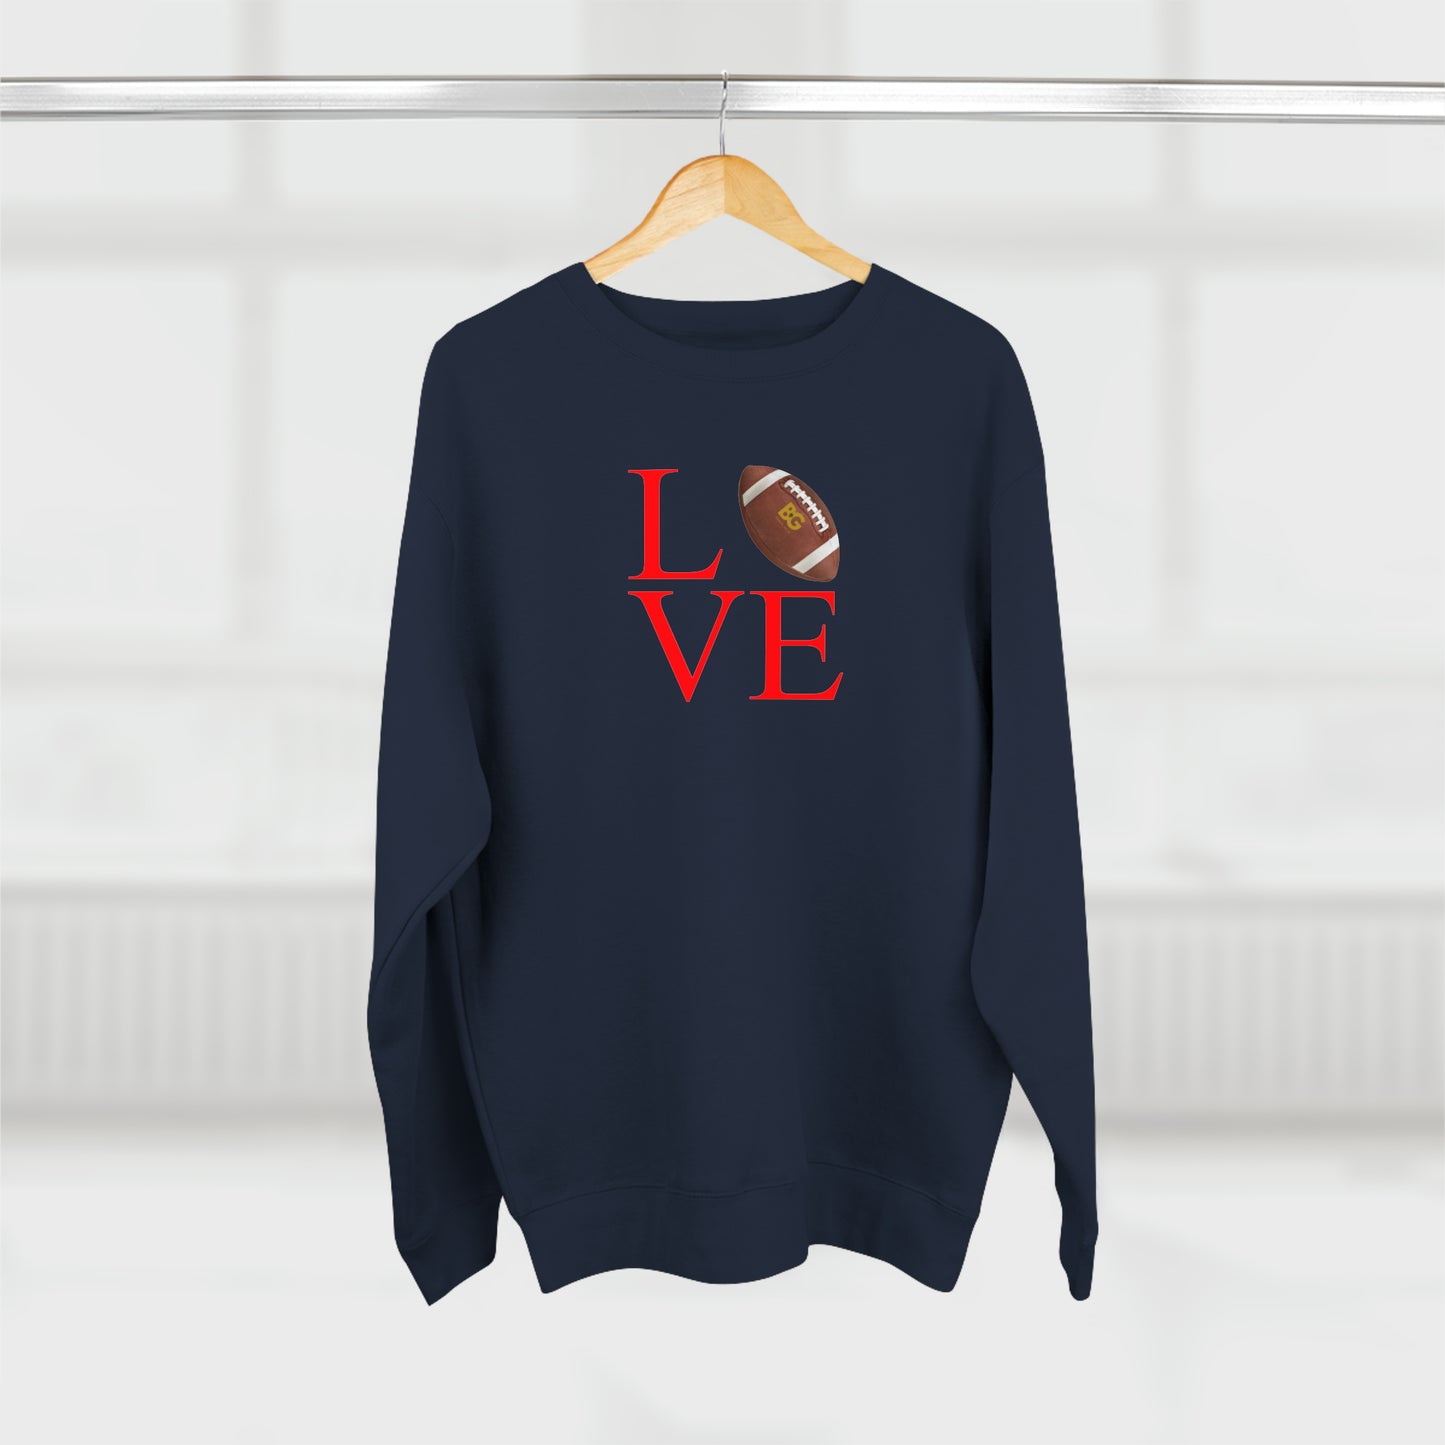 BG "LOVE football" Premium Crewneck Sweatshirt